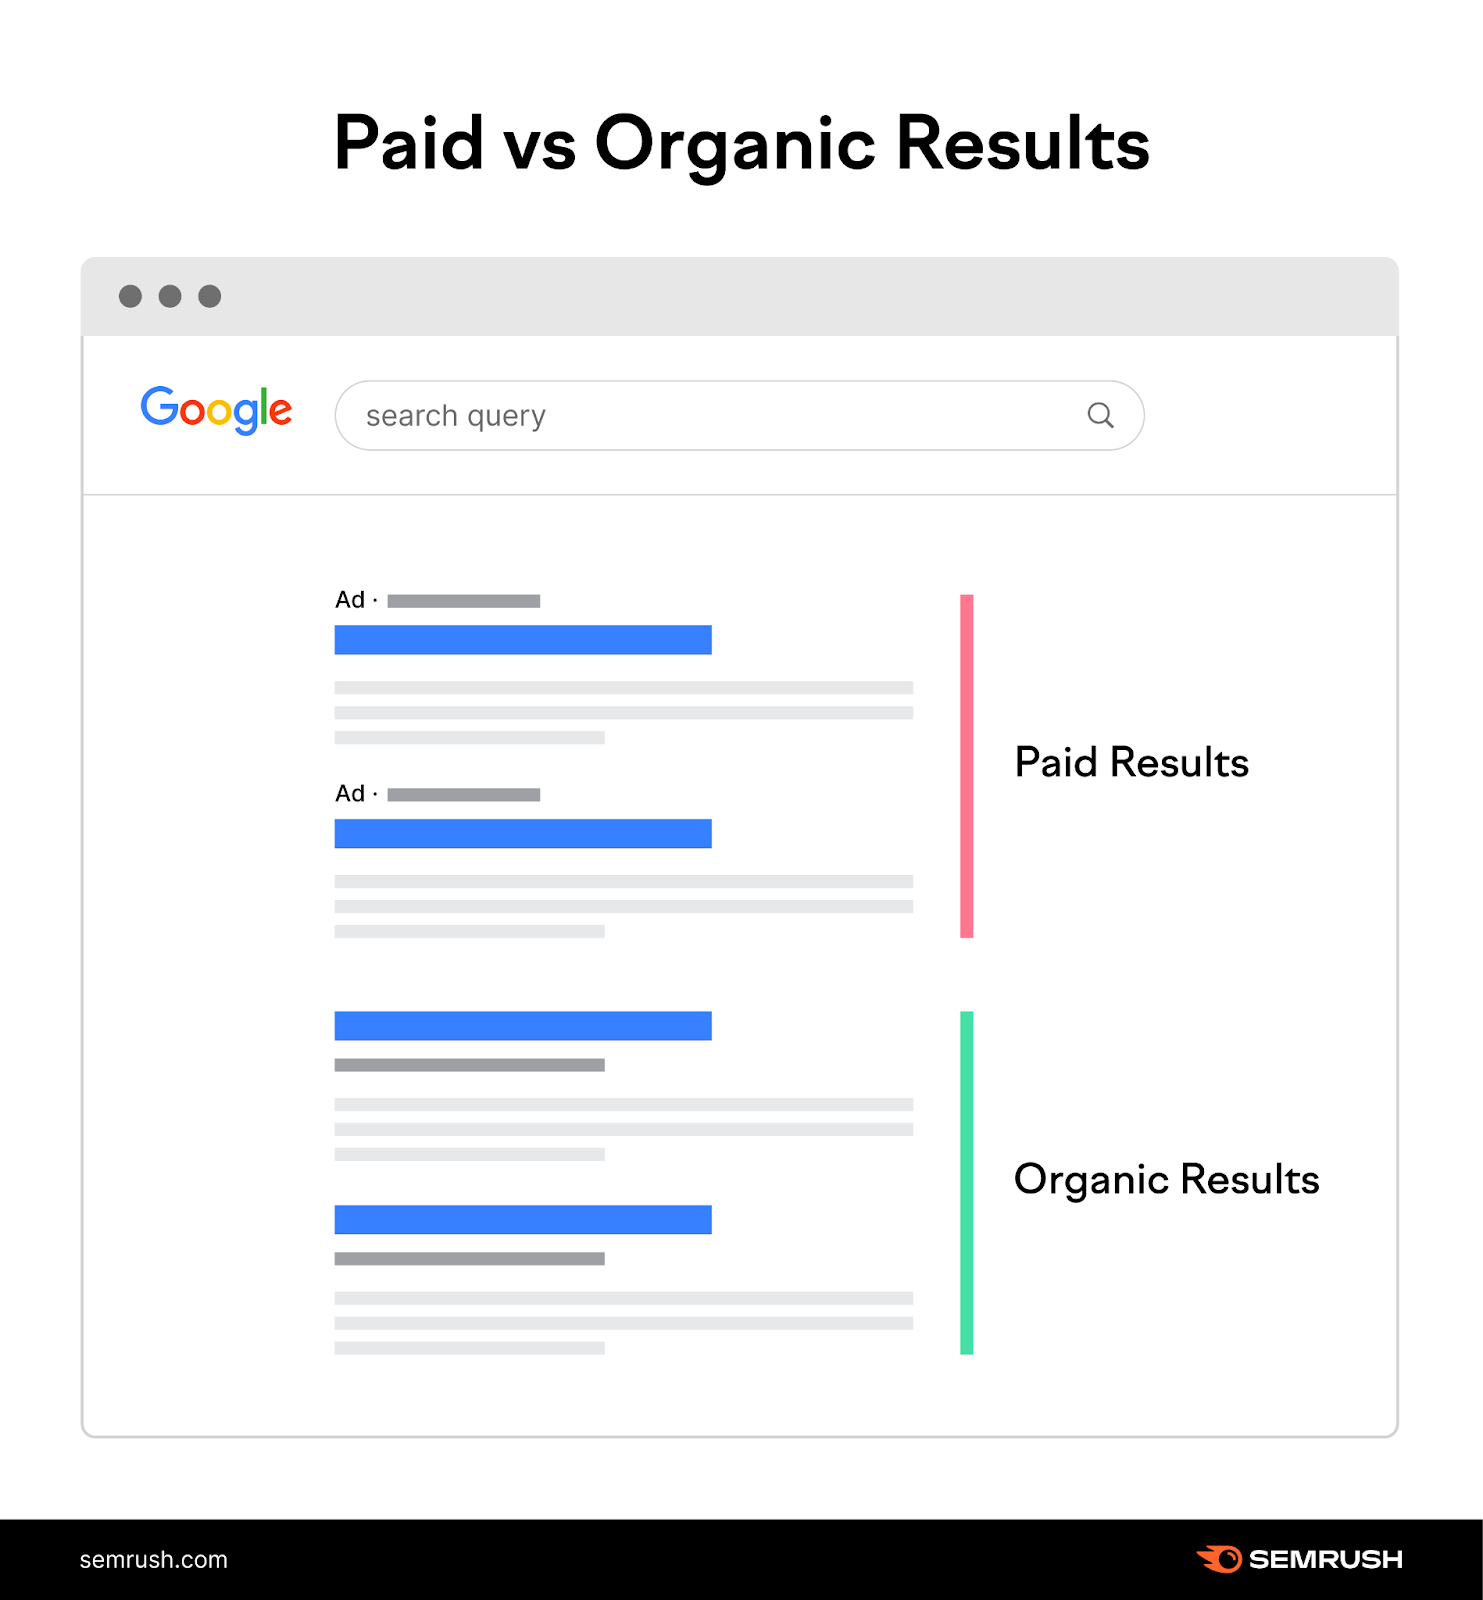 Paid vs organic results on Google SERP